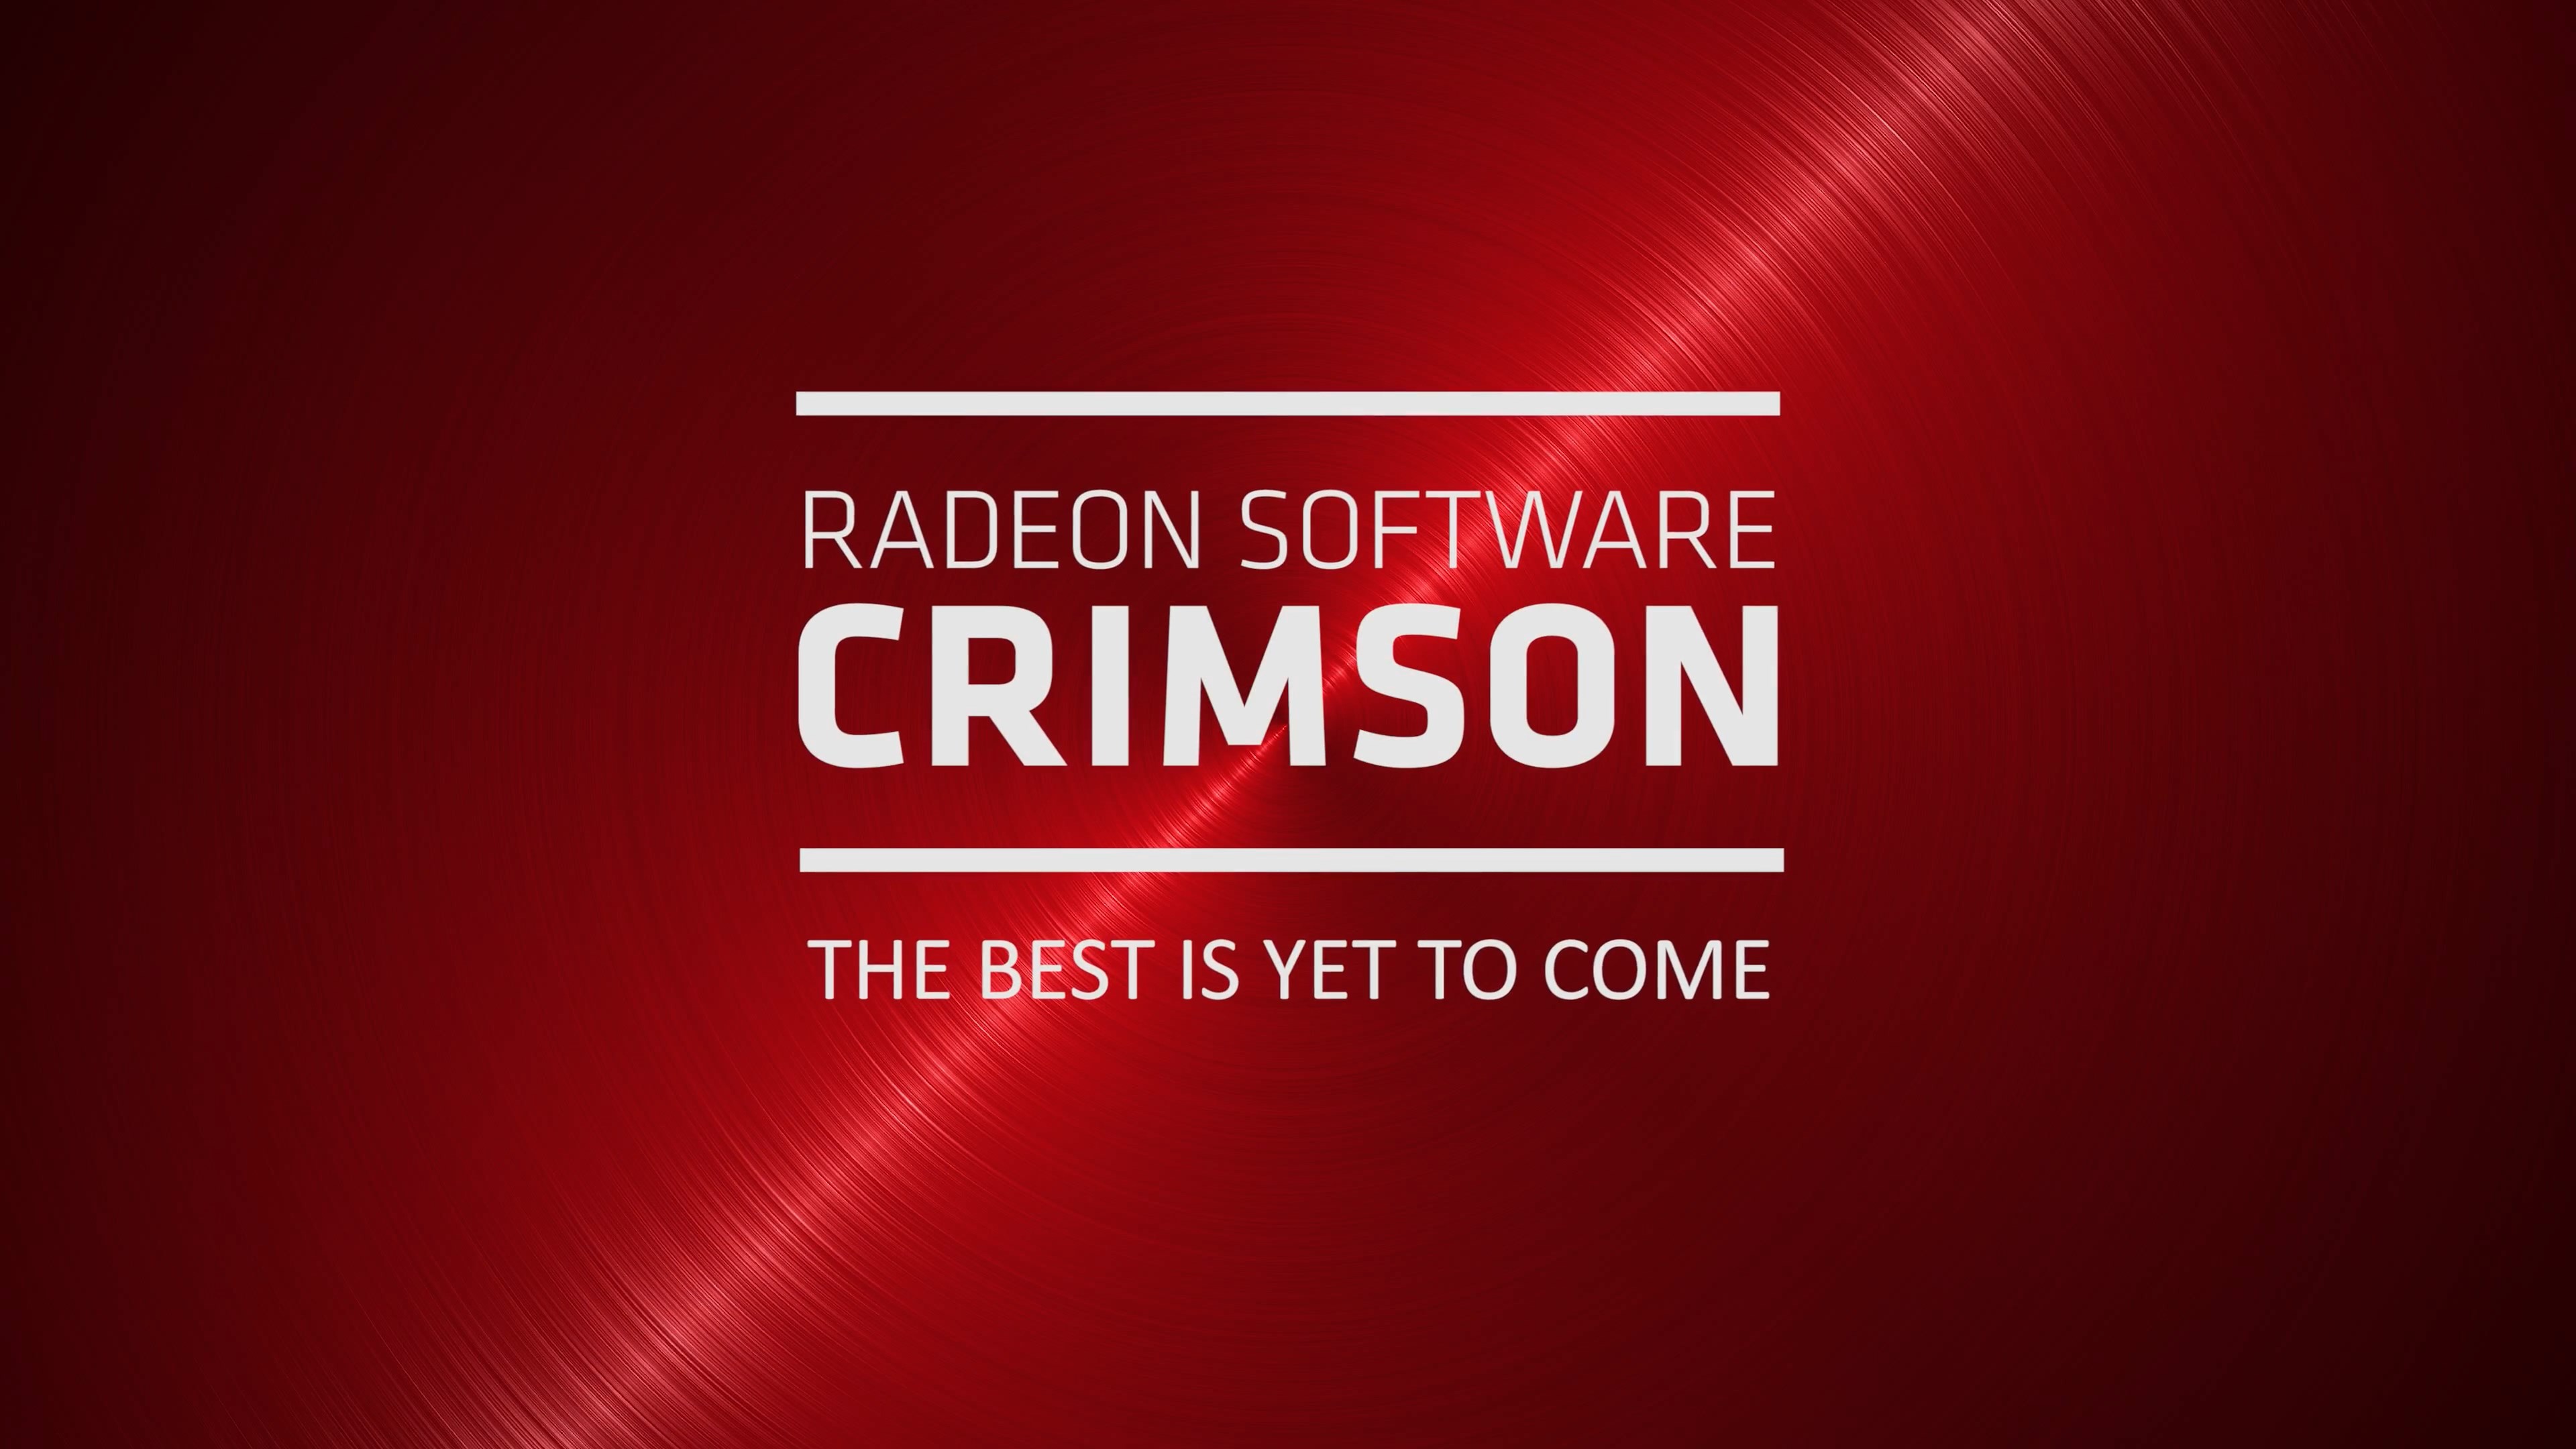 RIP AMD Catalyst, welcome Radeon Software : Crimson Edition 33